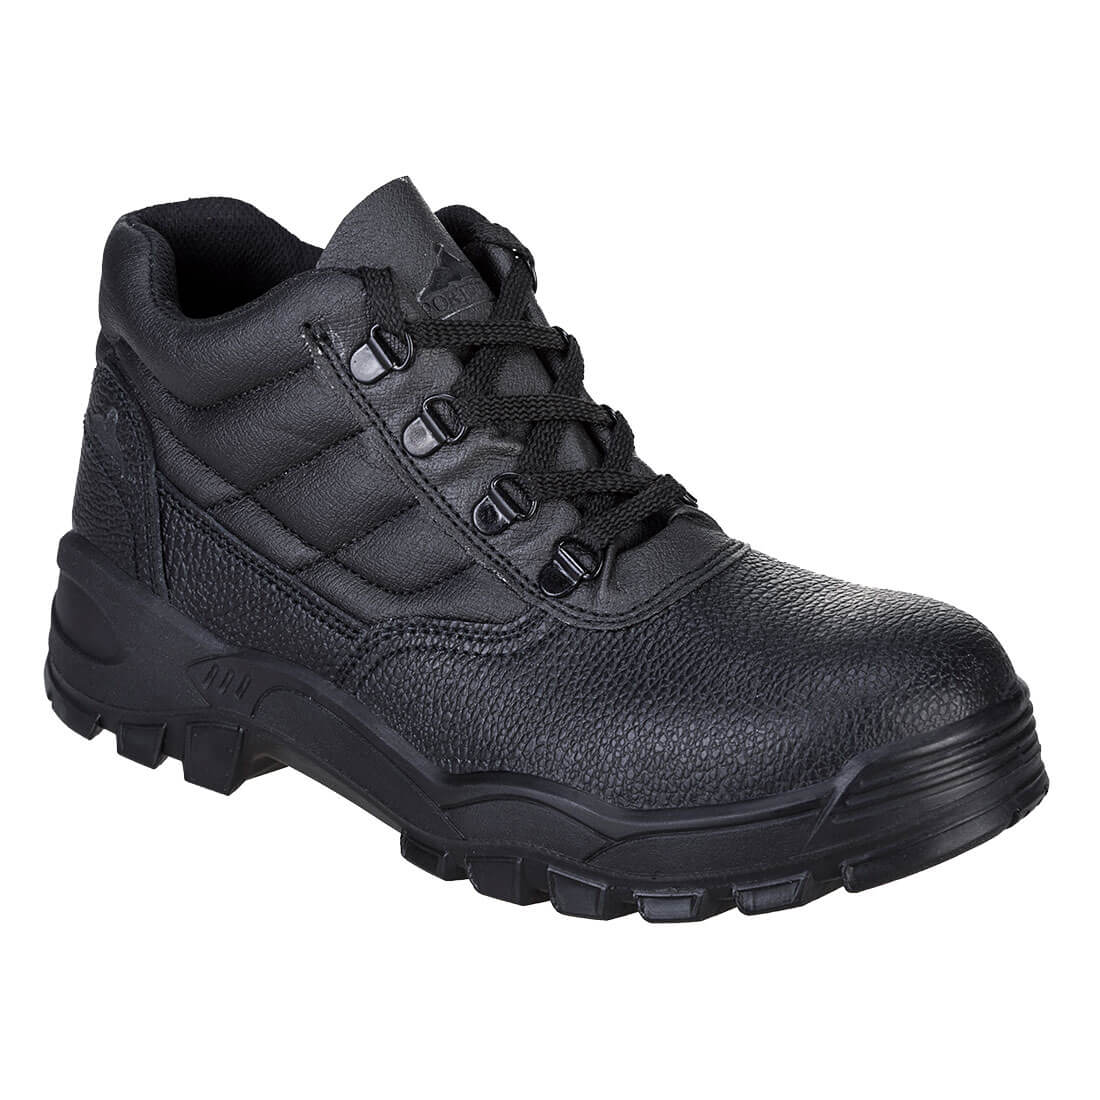 Portwest Safety Boots - Black | Portwest Ireland | Portwest Ireland